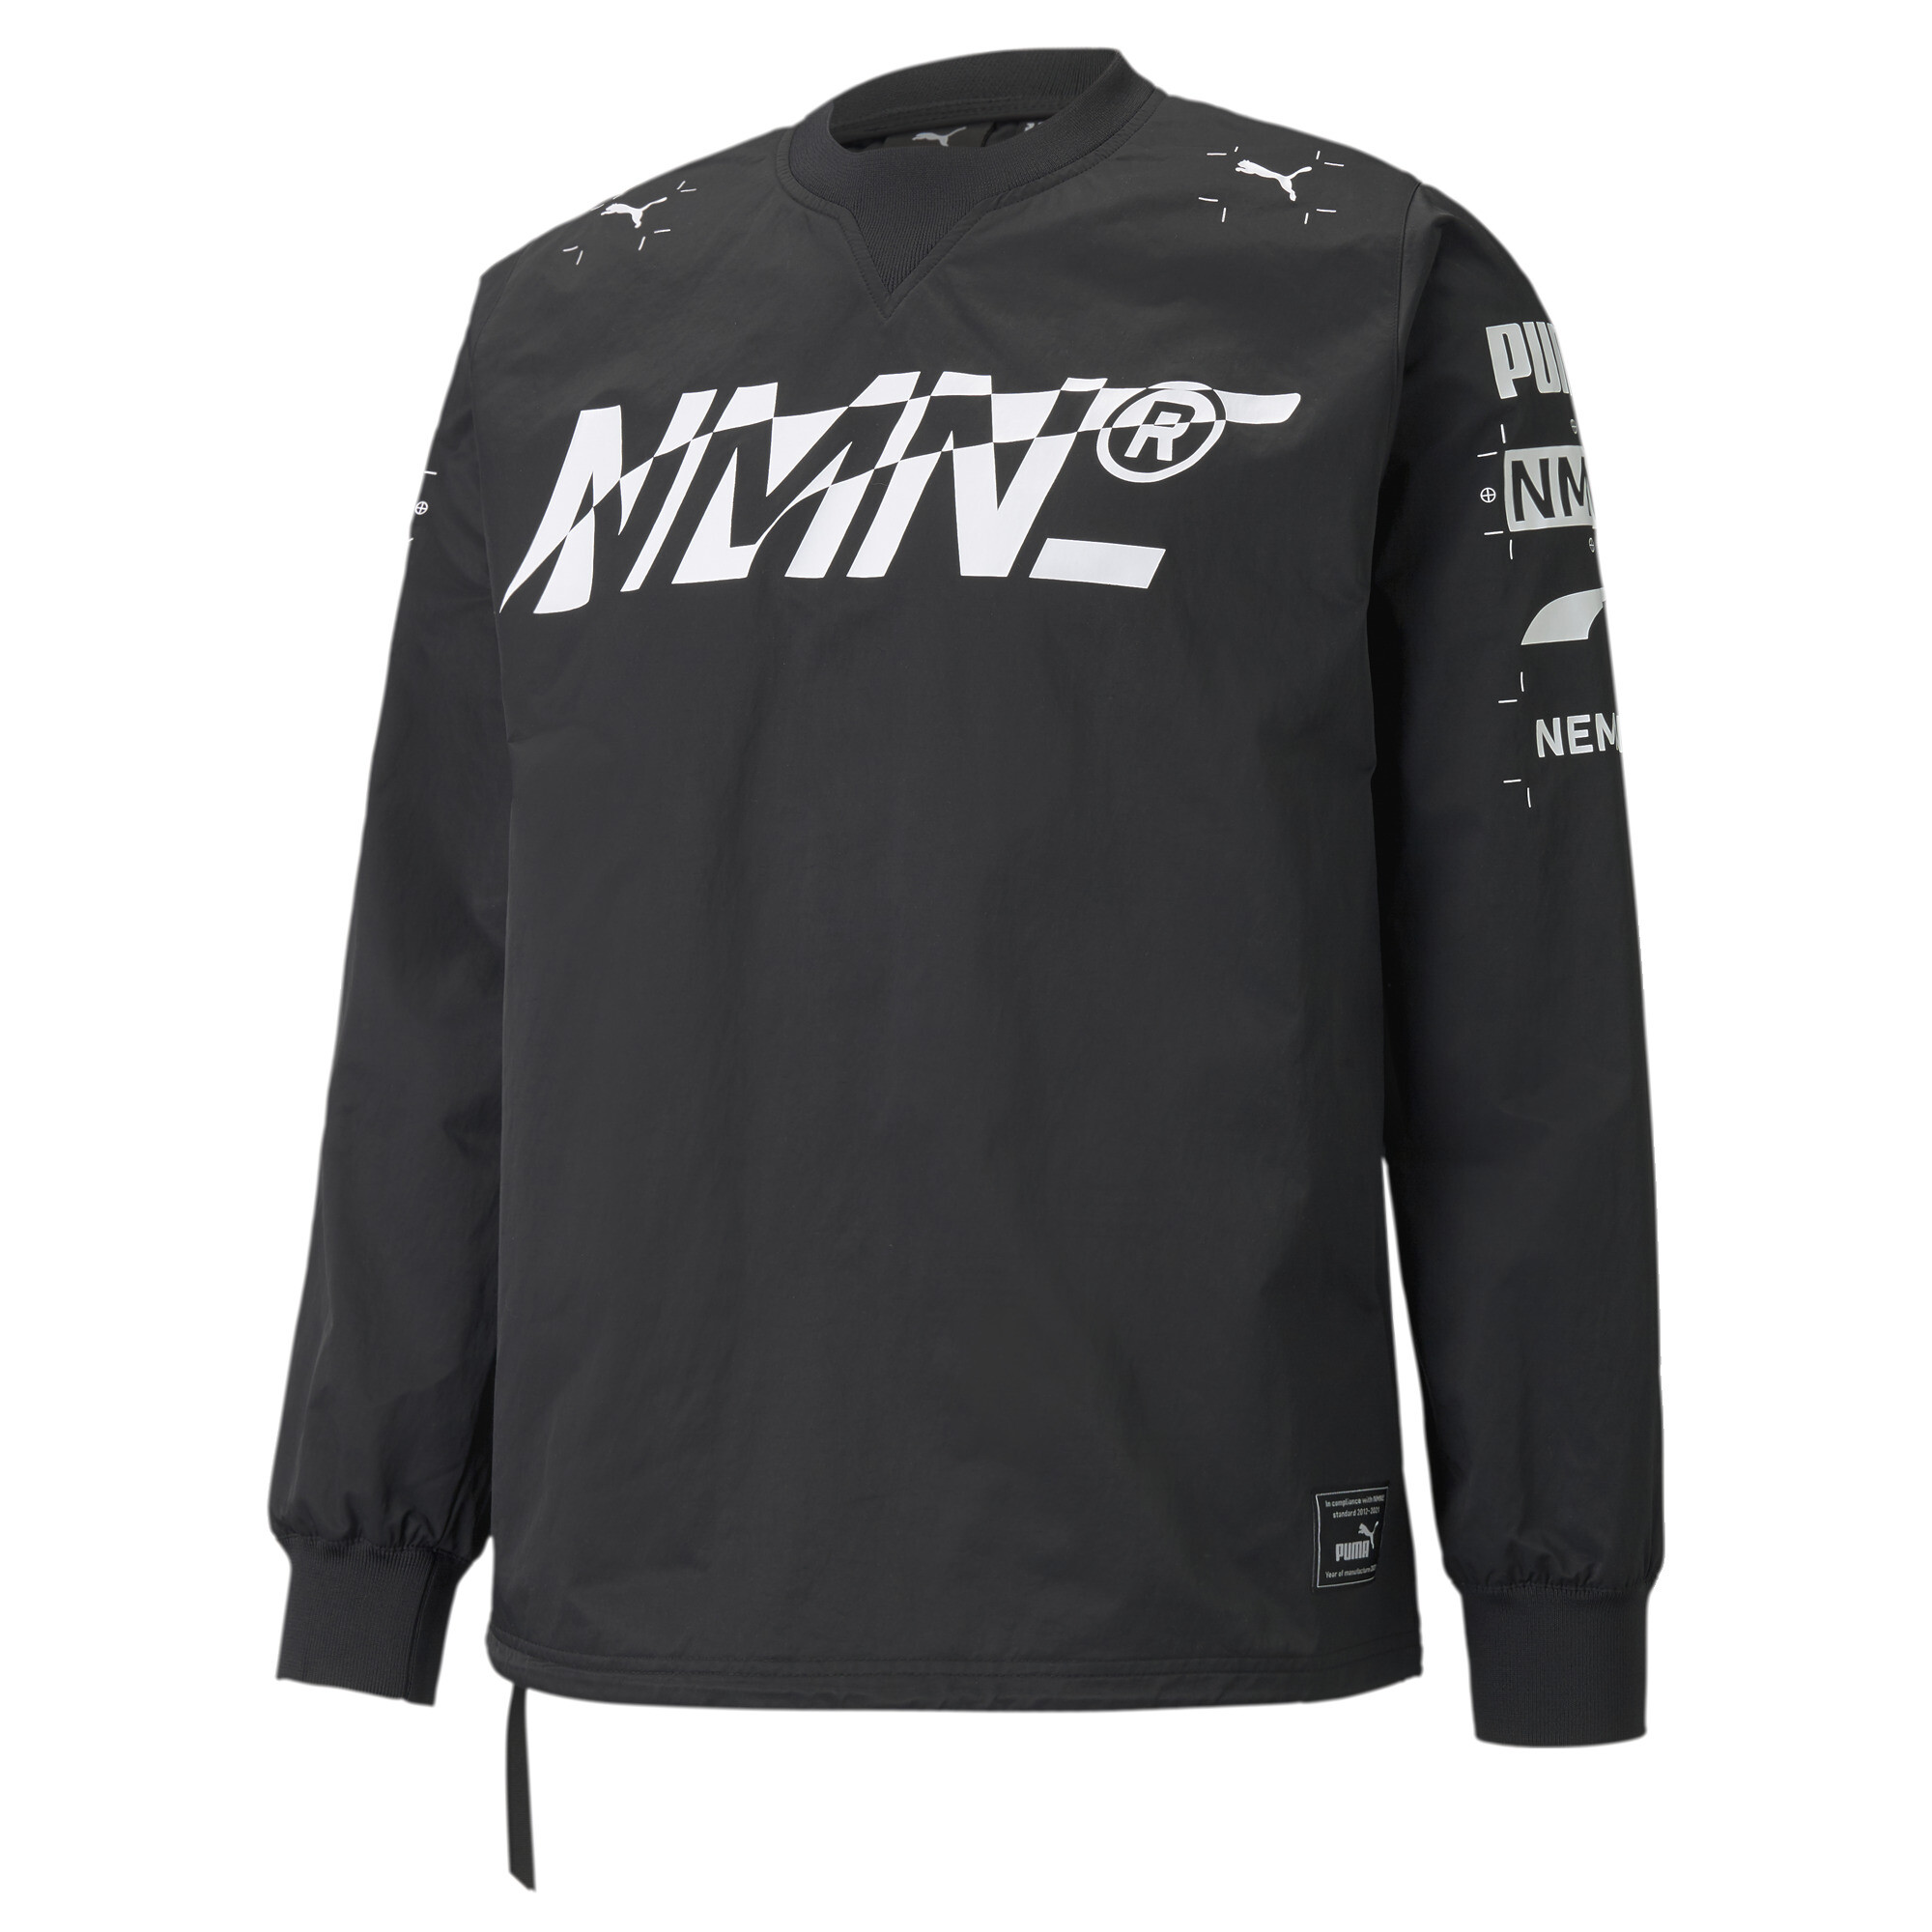 Men's Puma X NEMEN Tech Crew Neck's Sweatshirt, Black, Size S, Clothing